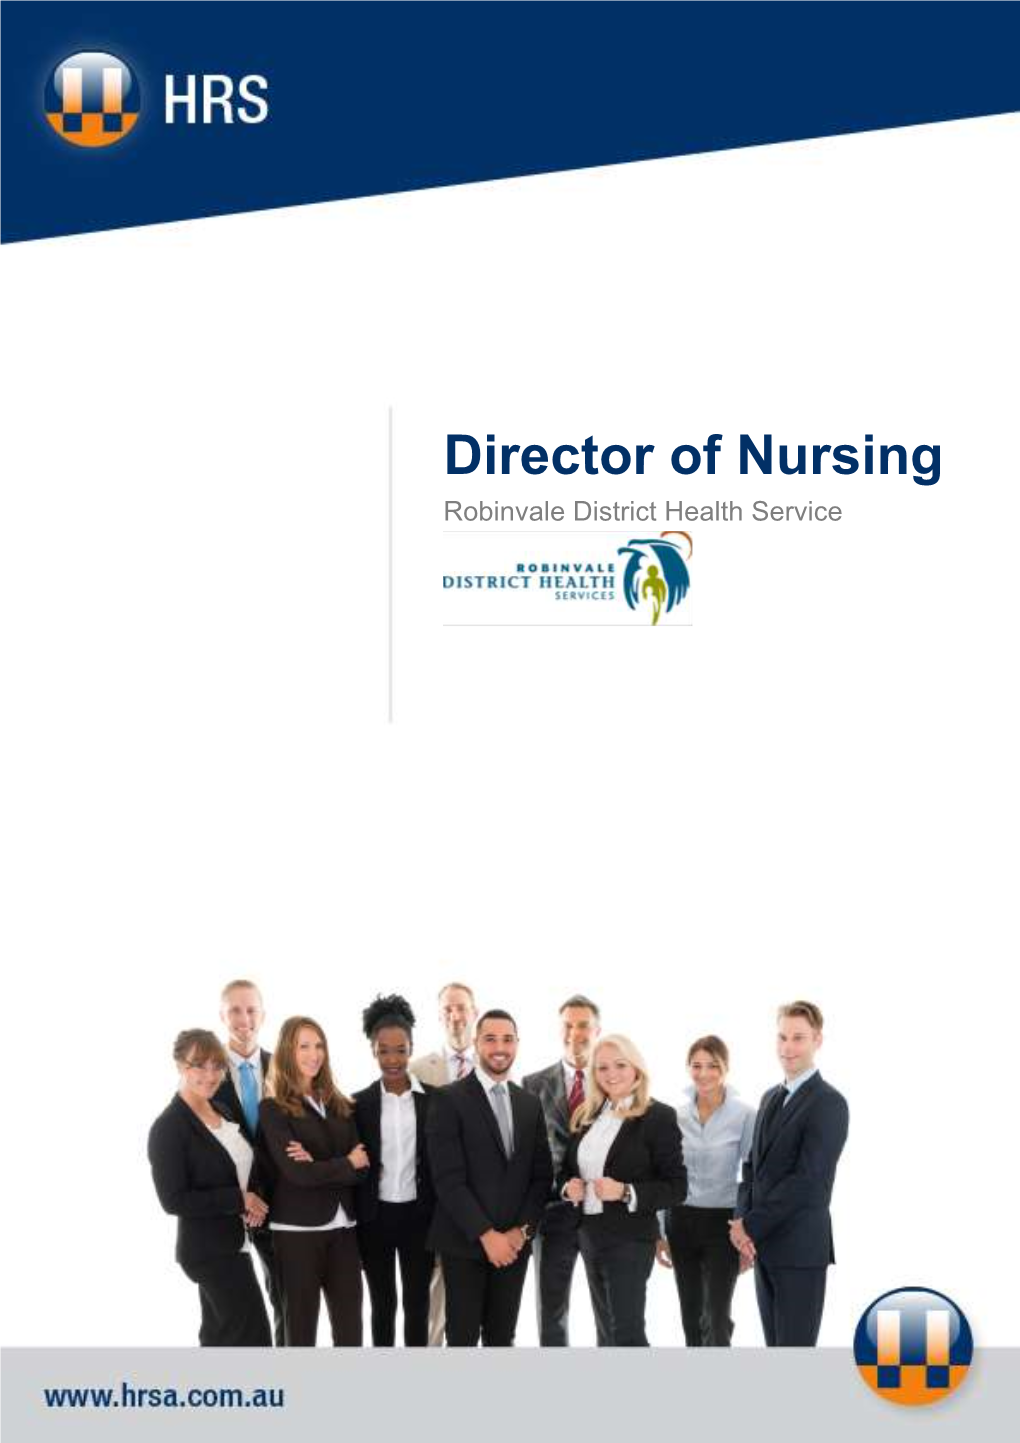 Director of Nursing Robinvale District Health Service